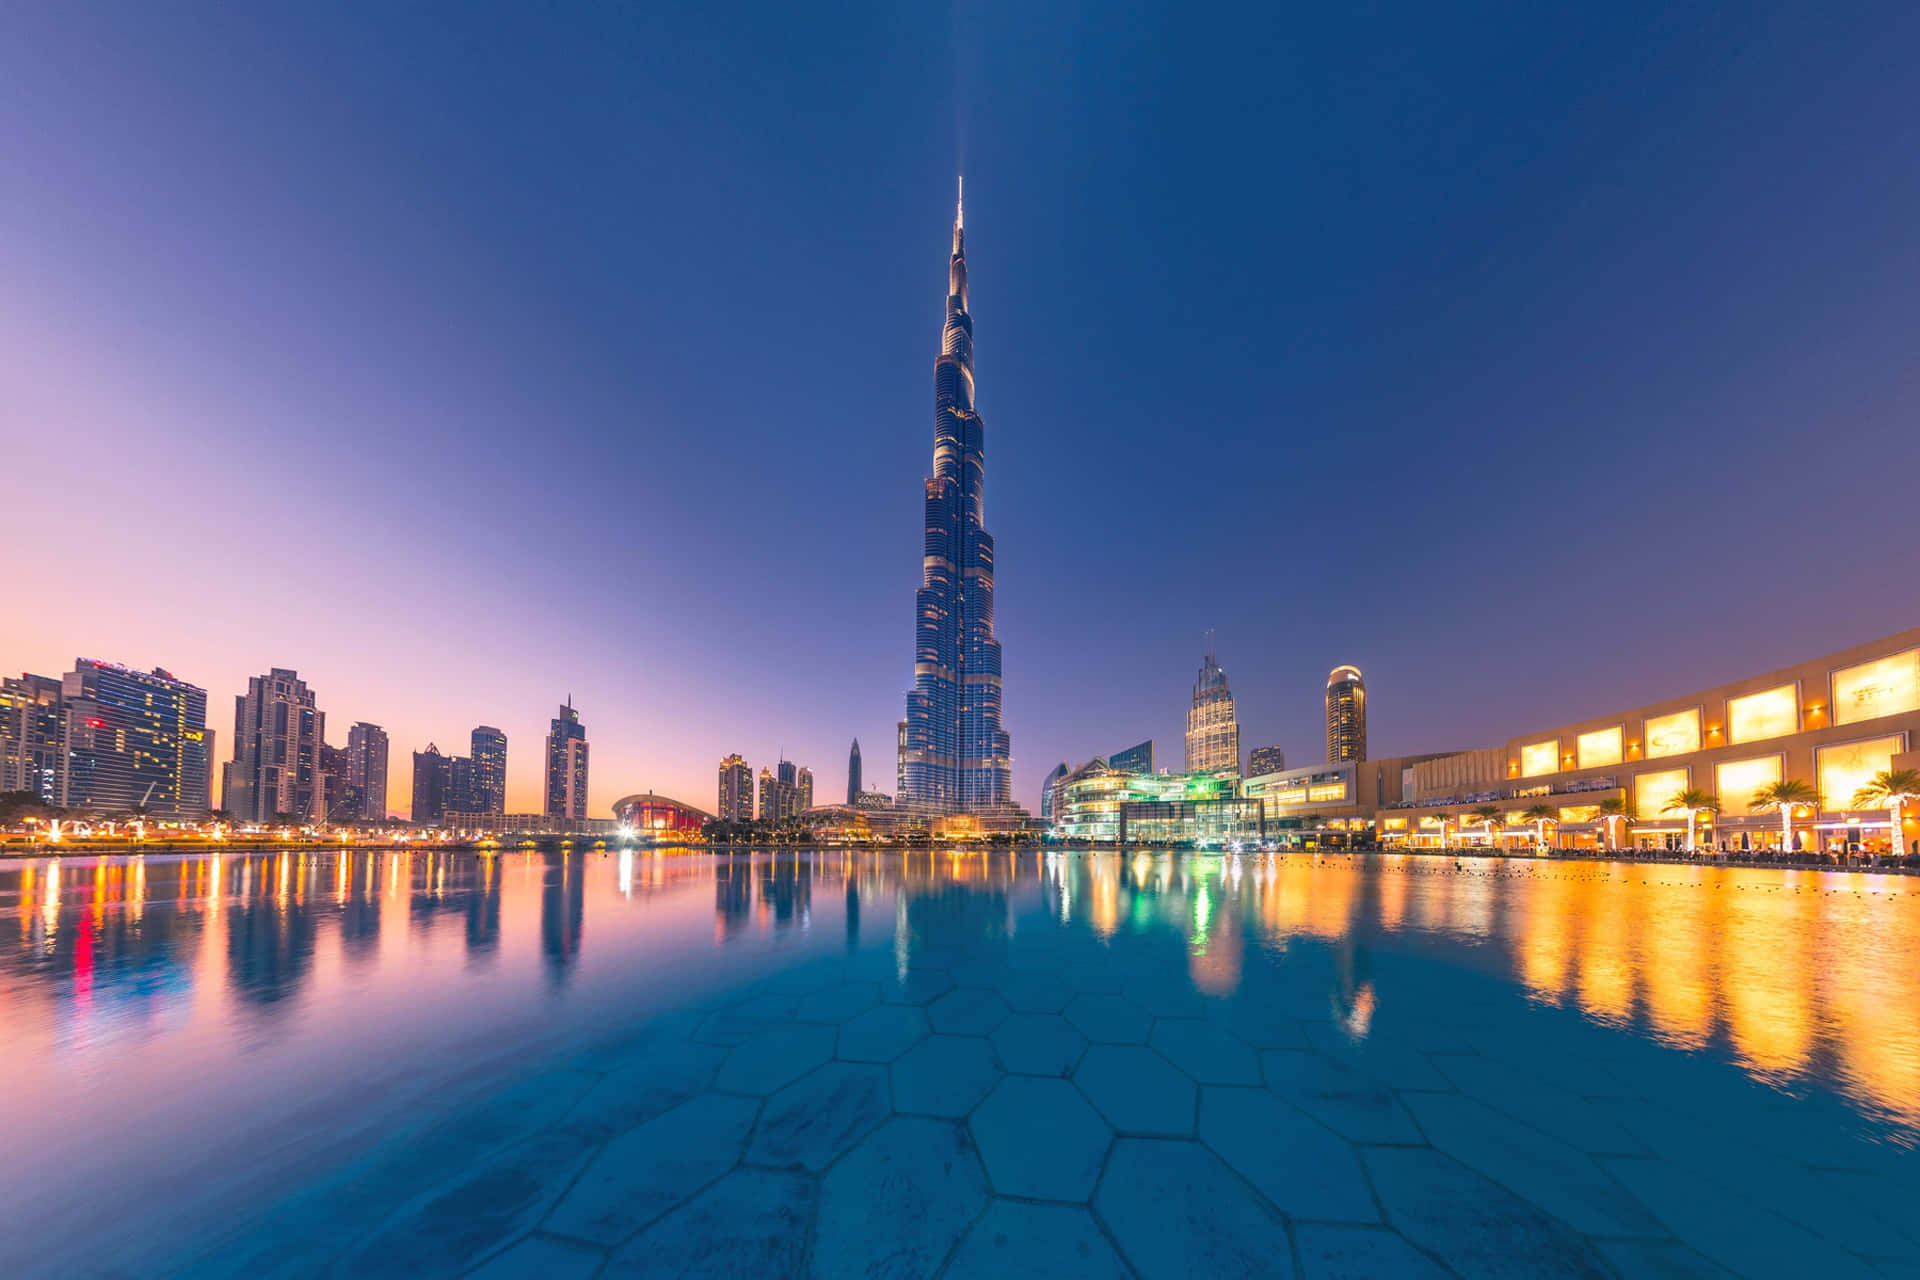 Majestic Burj Khalifa standing tall against the vivid blue sky